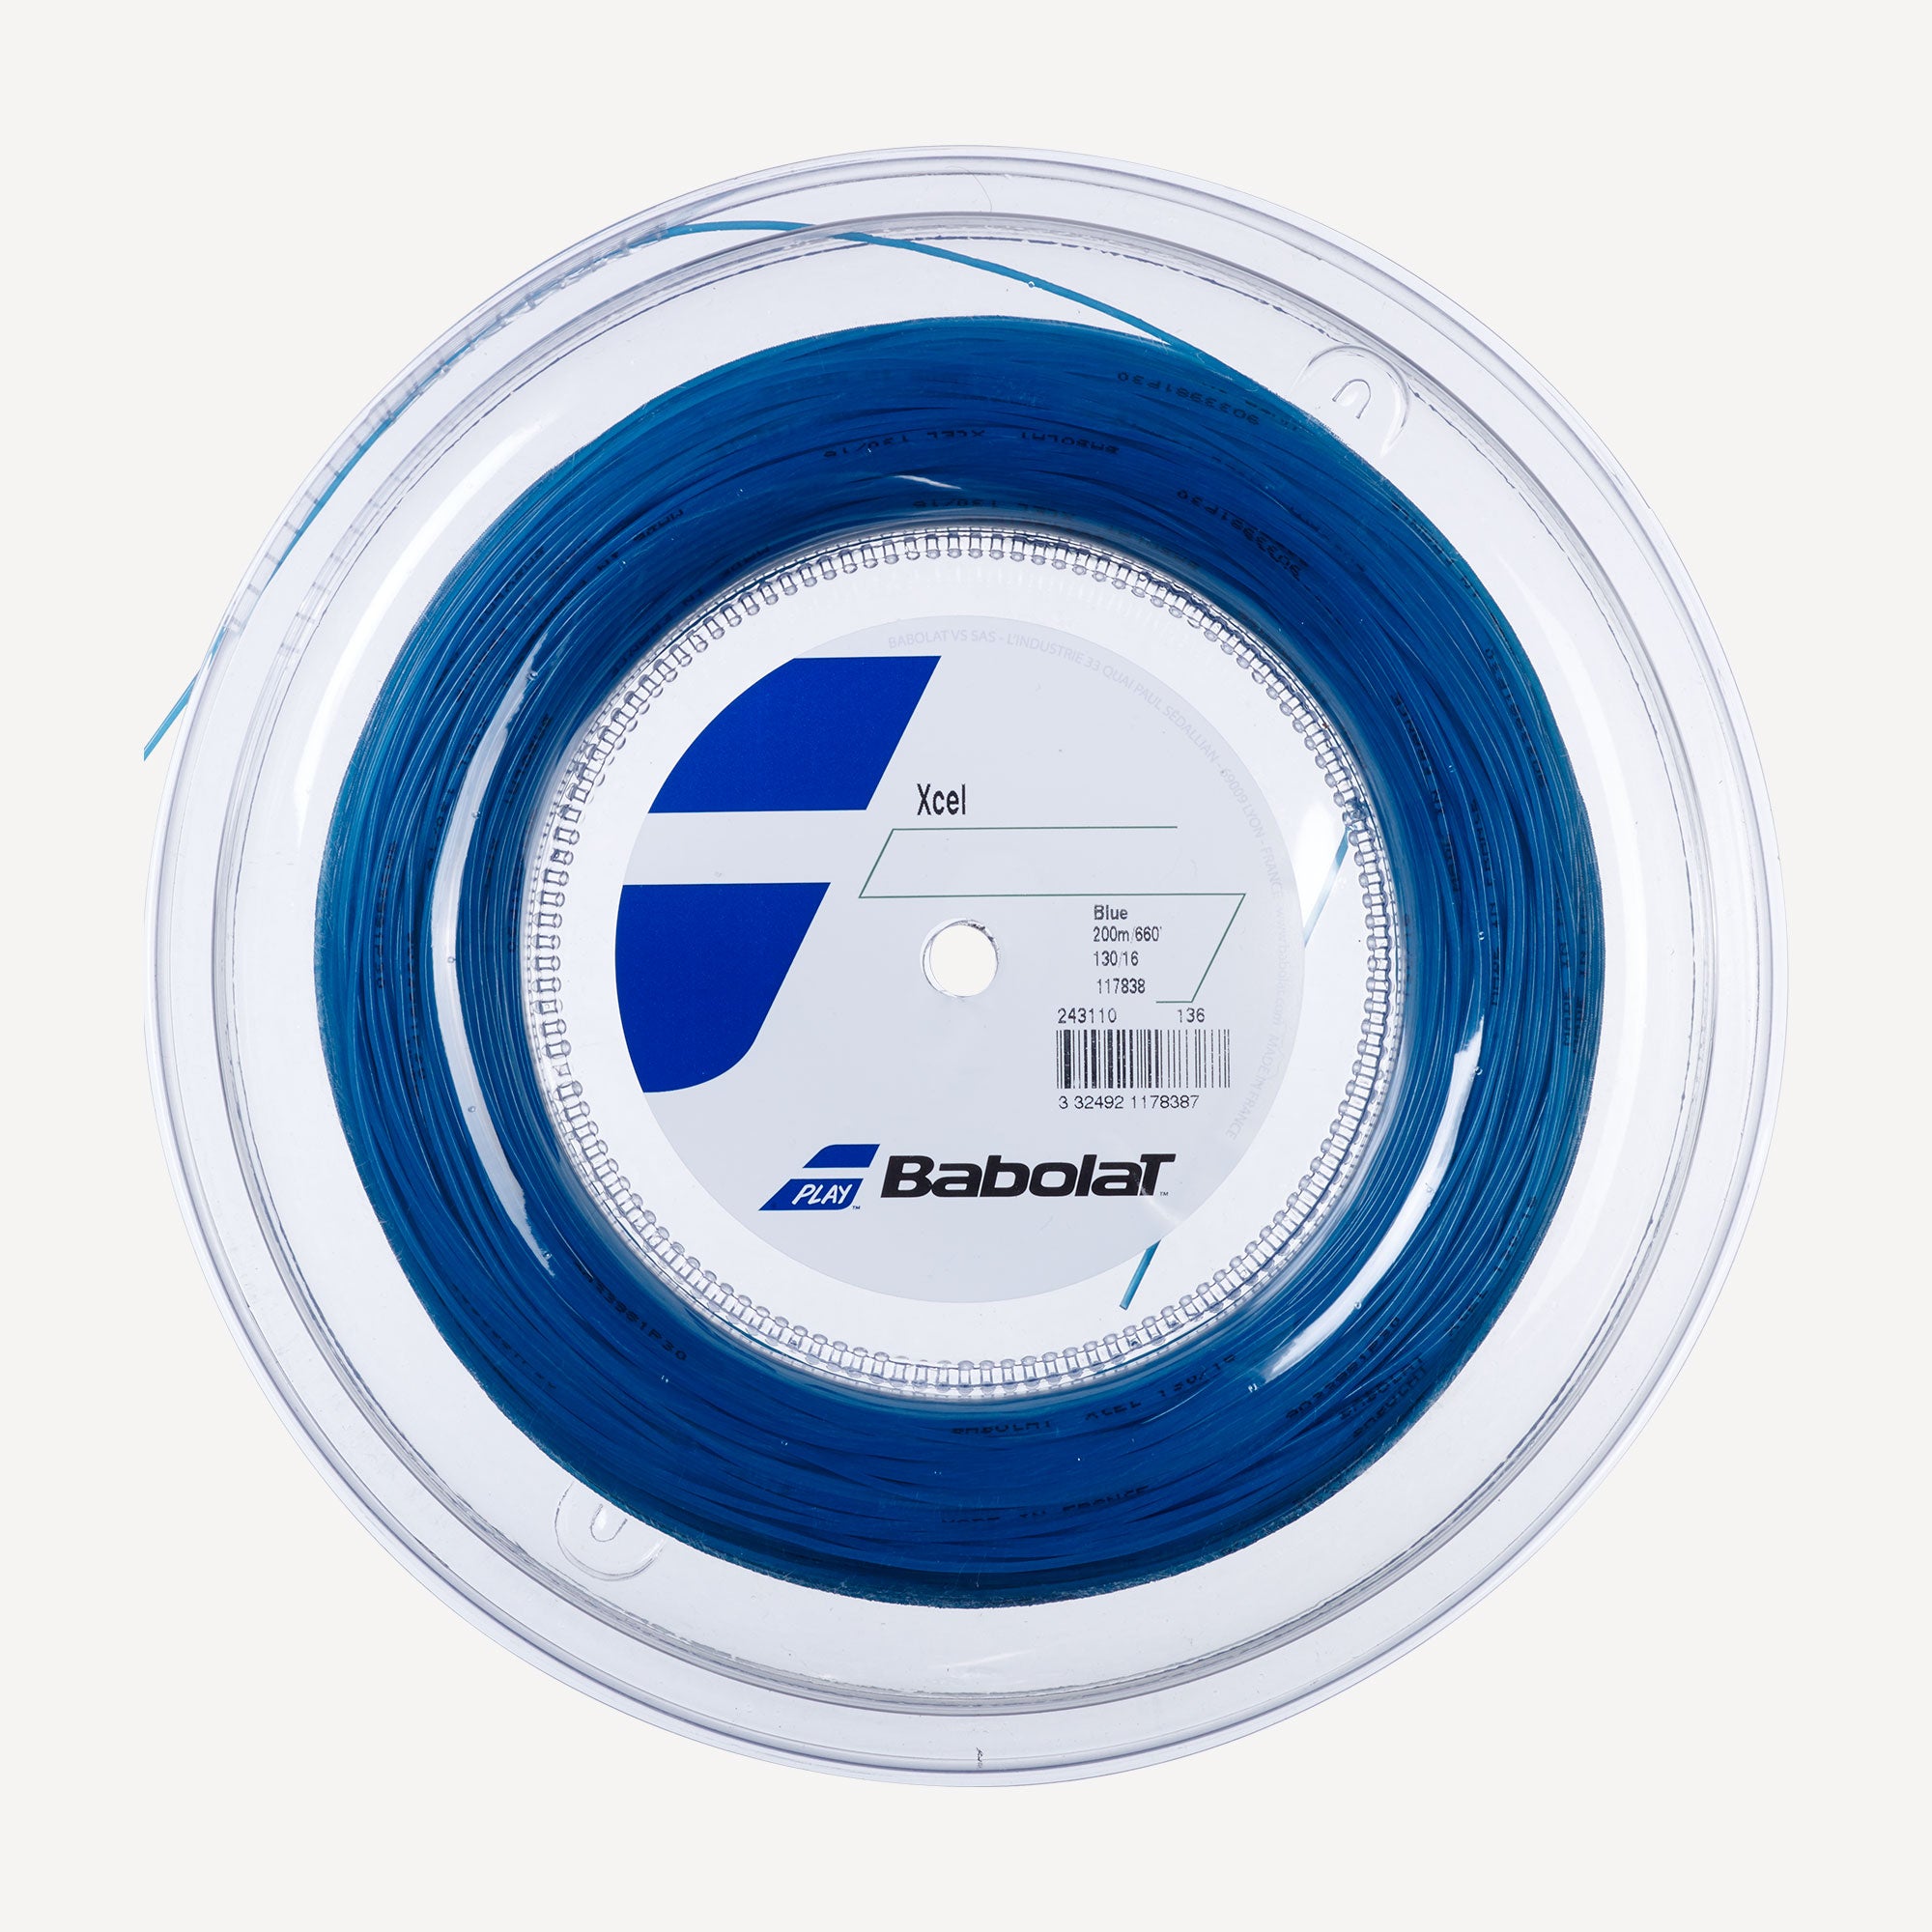 Babolat Xcel Tennis String Reel 200m Blue